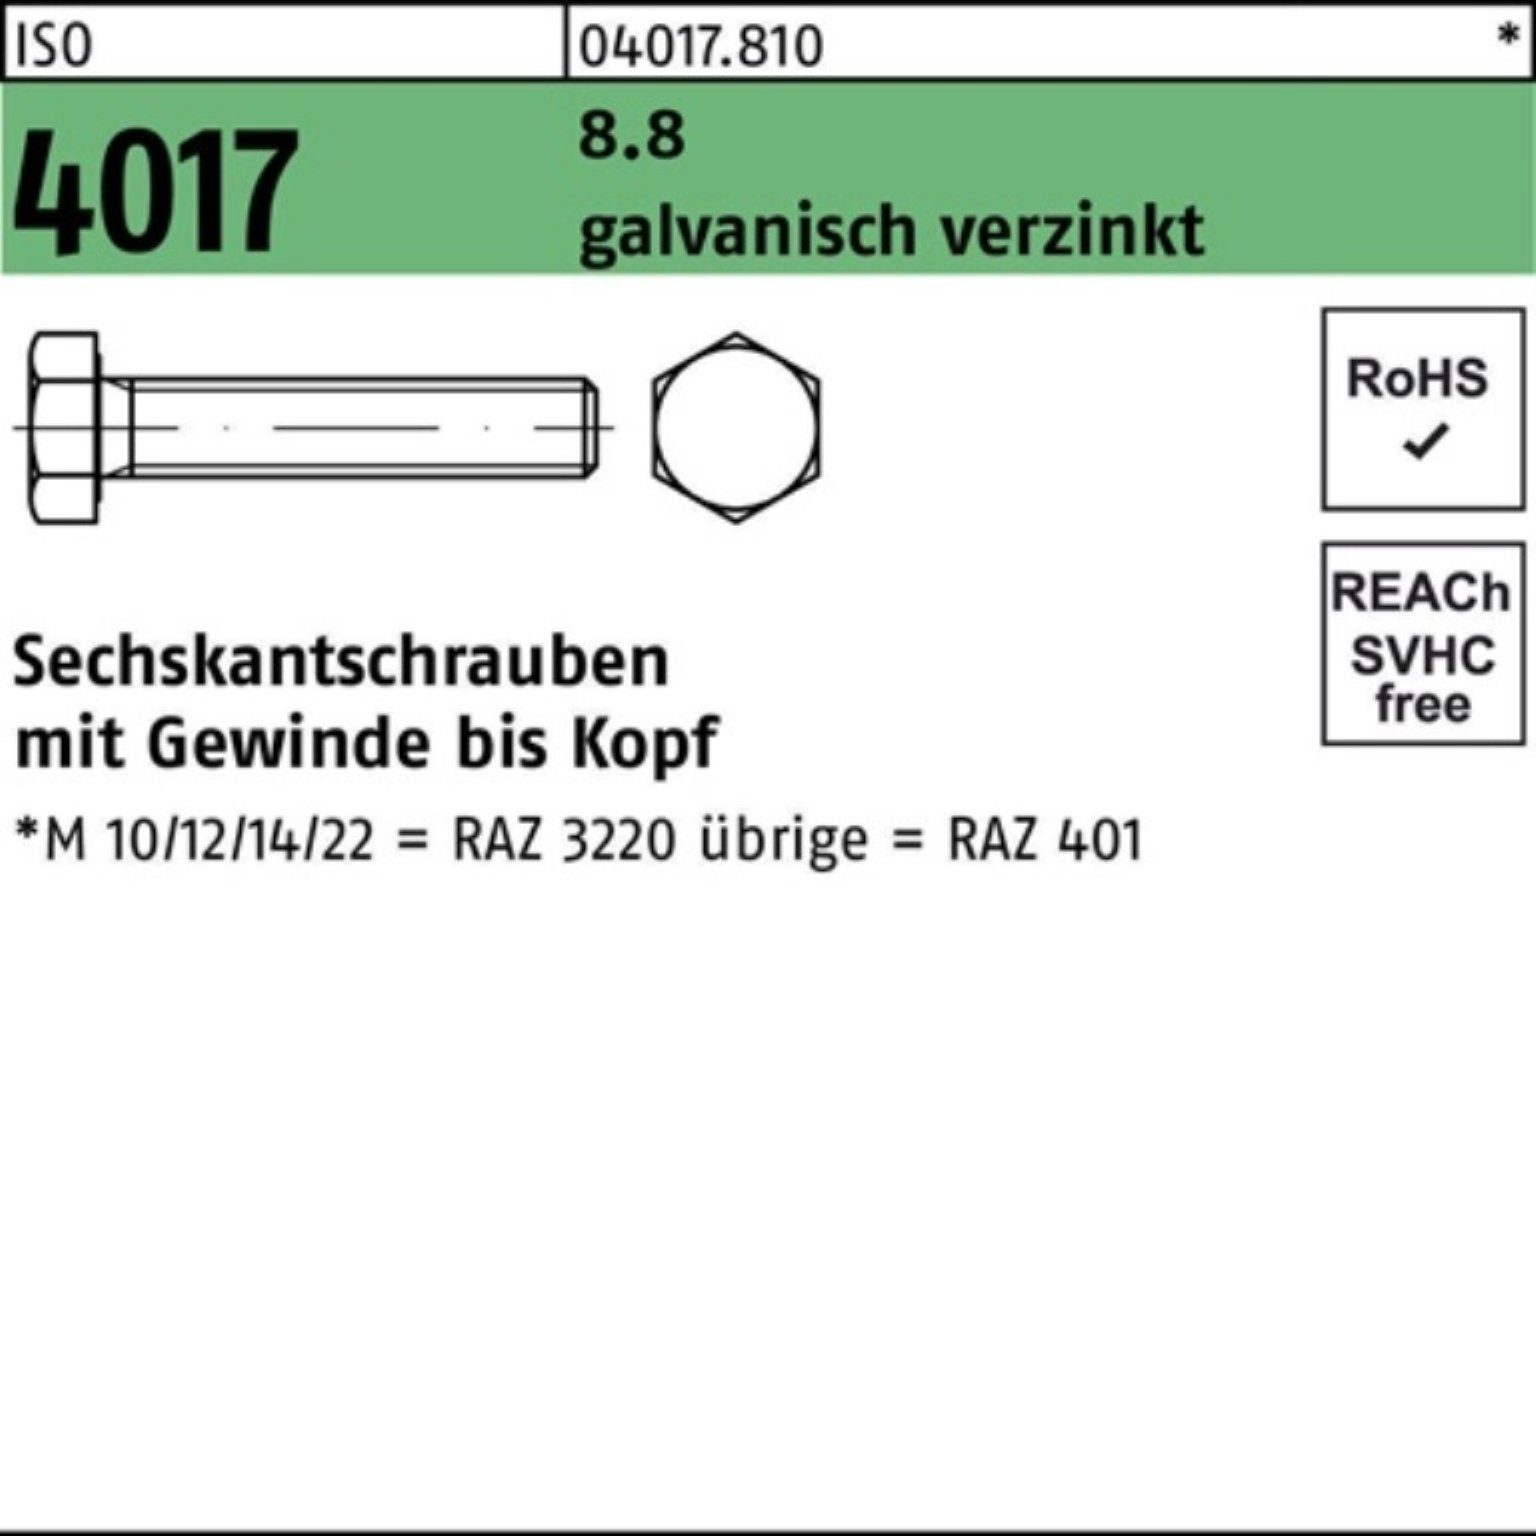 340 ISO Sechskantschraube 8.8 Bufab Pack 1 M16x 4017 VG 100er Sechskantschraube galv.verz. St